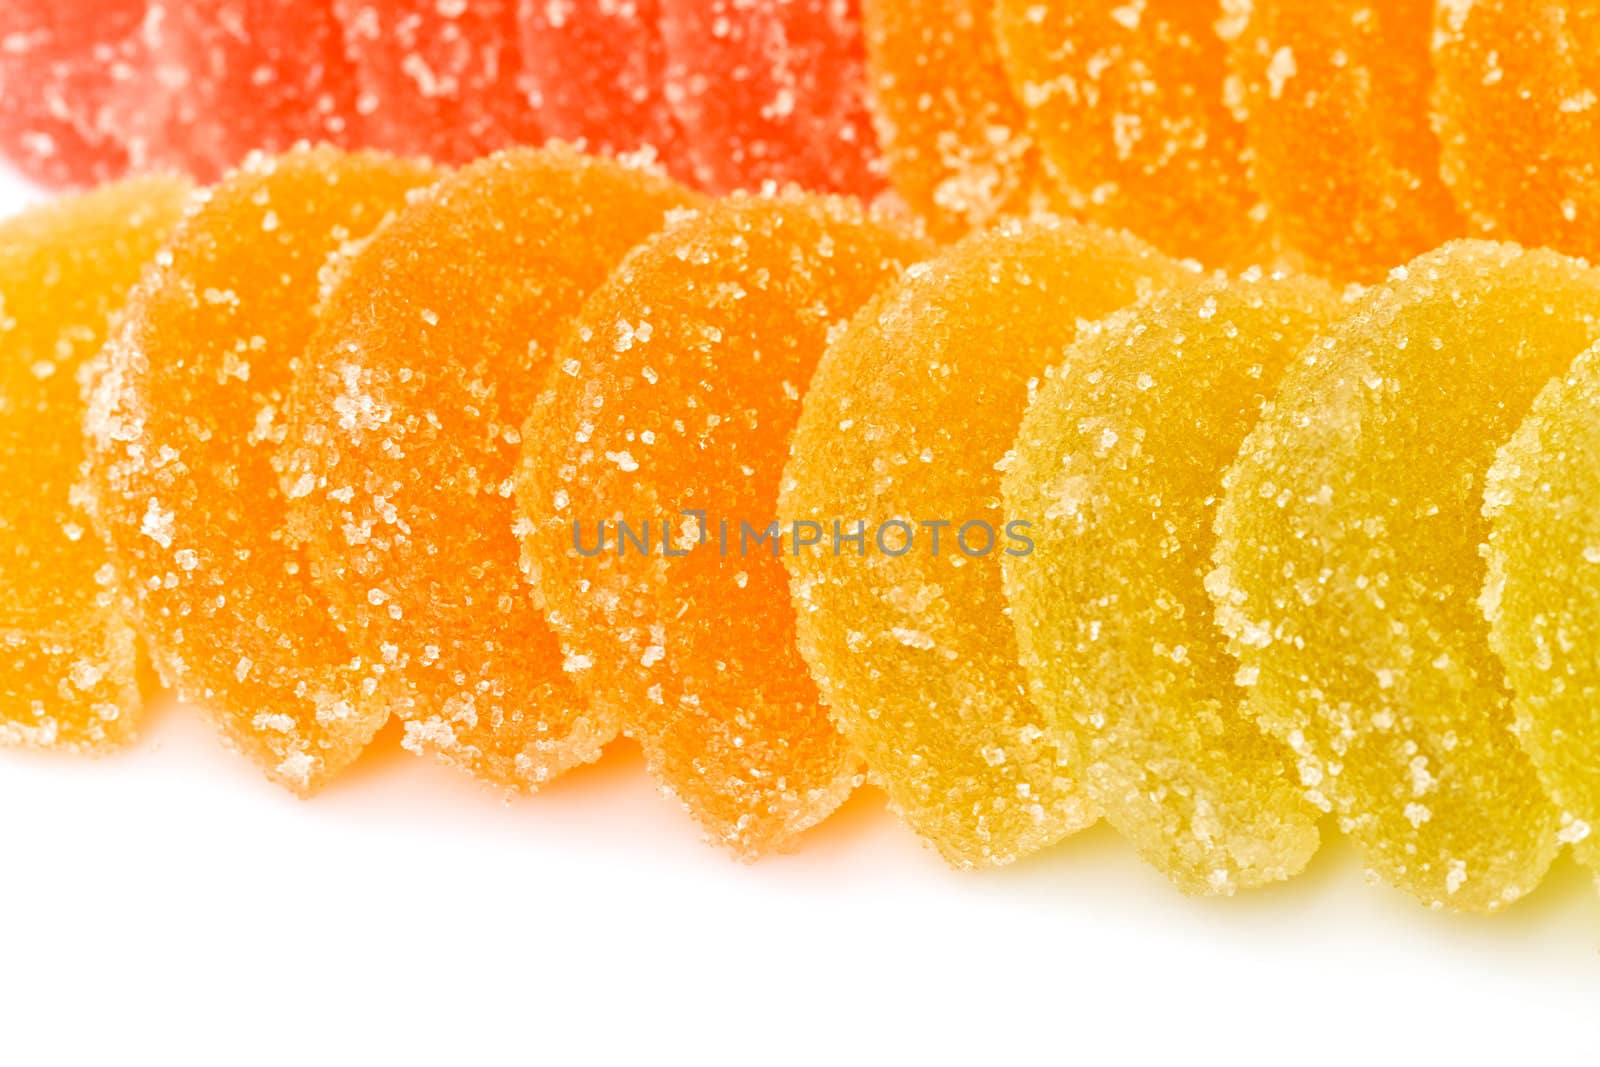 photo of marmalade slices closeup